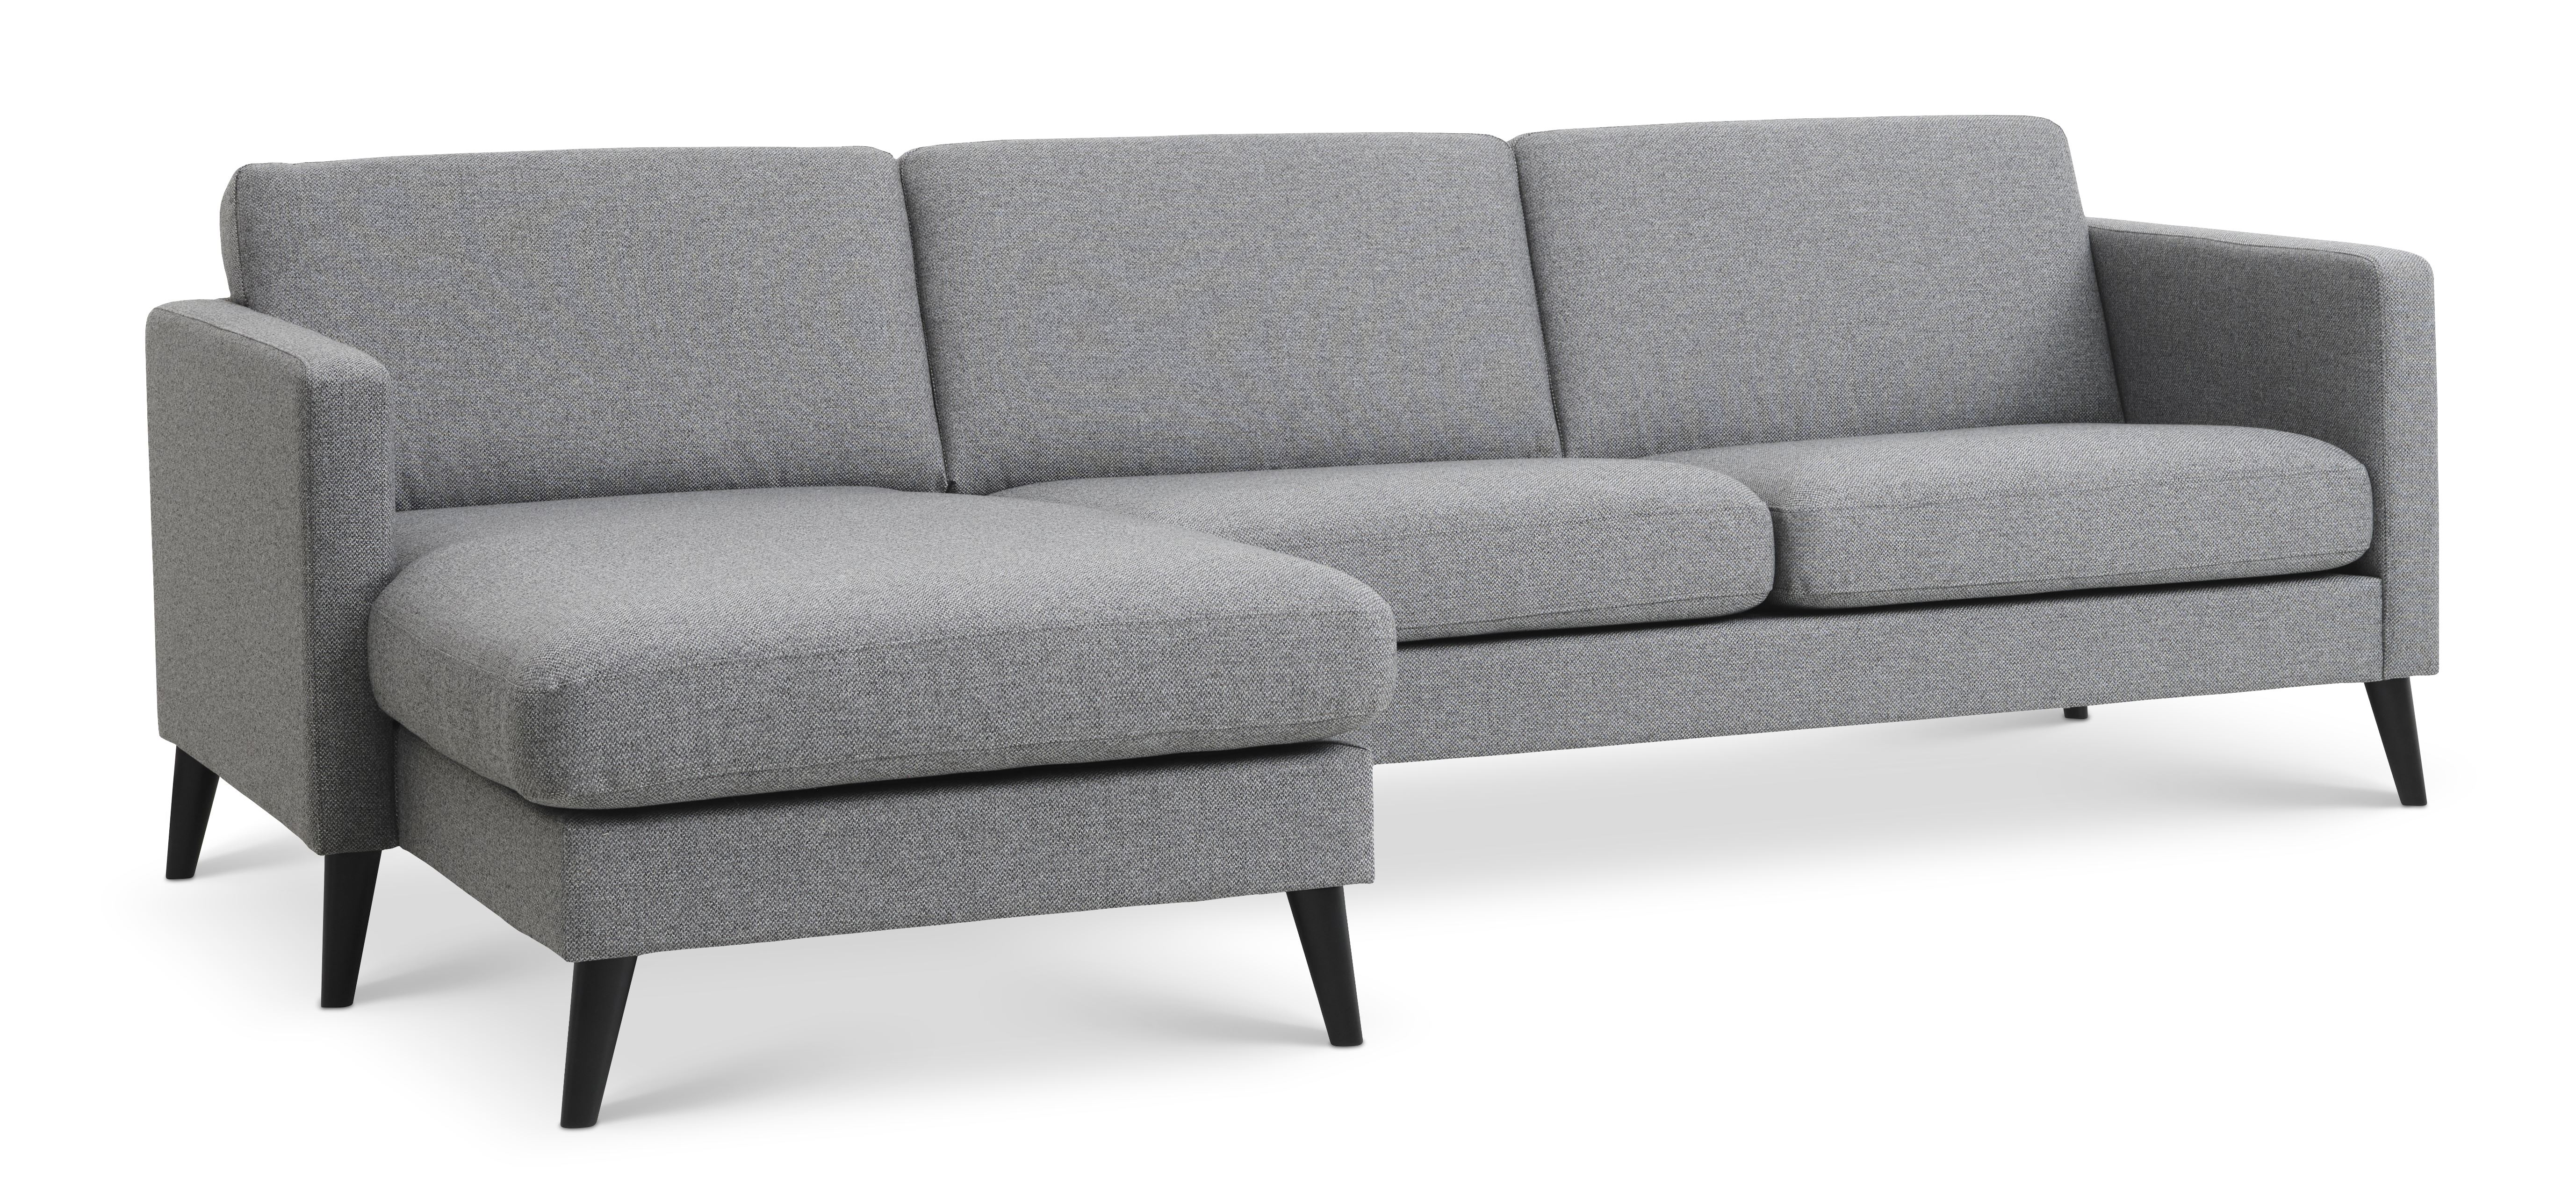 Ask sæt 51 3D sofa, m. chaiselong - lys granitgrå polyester stof og sort træ